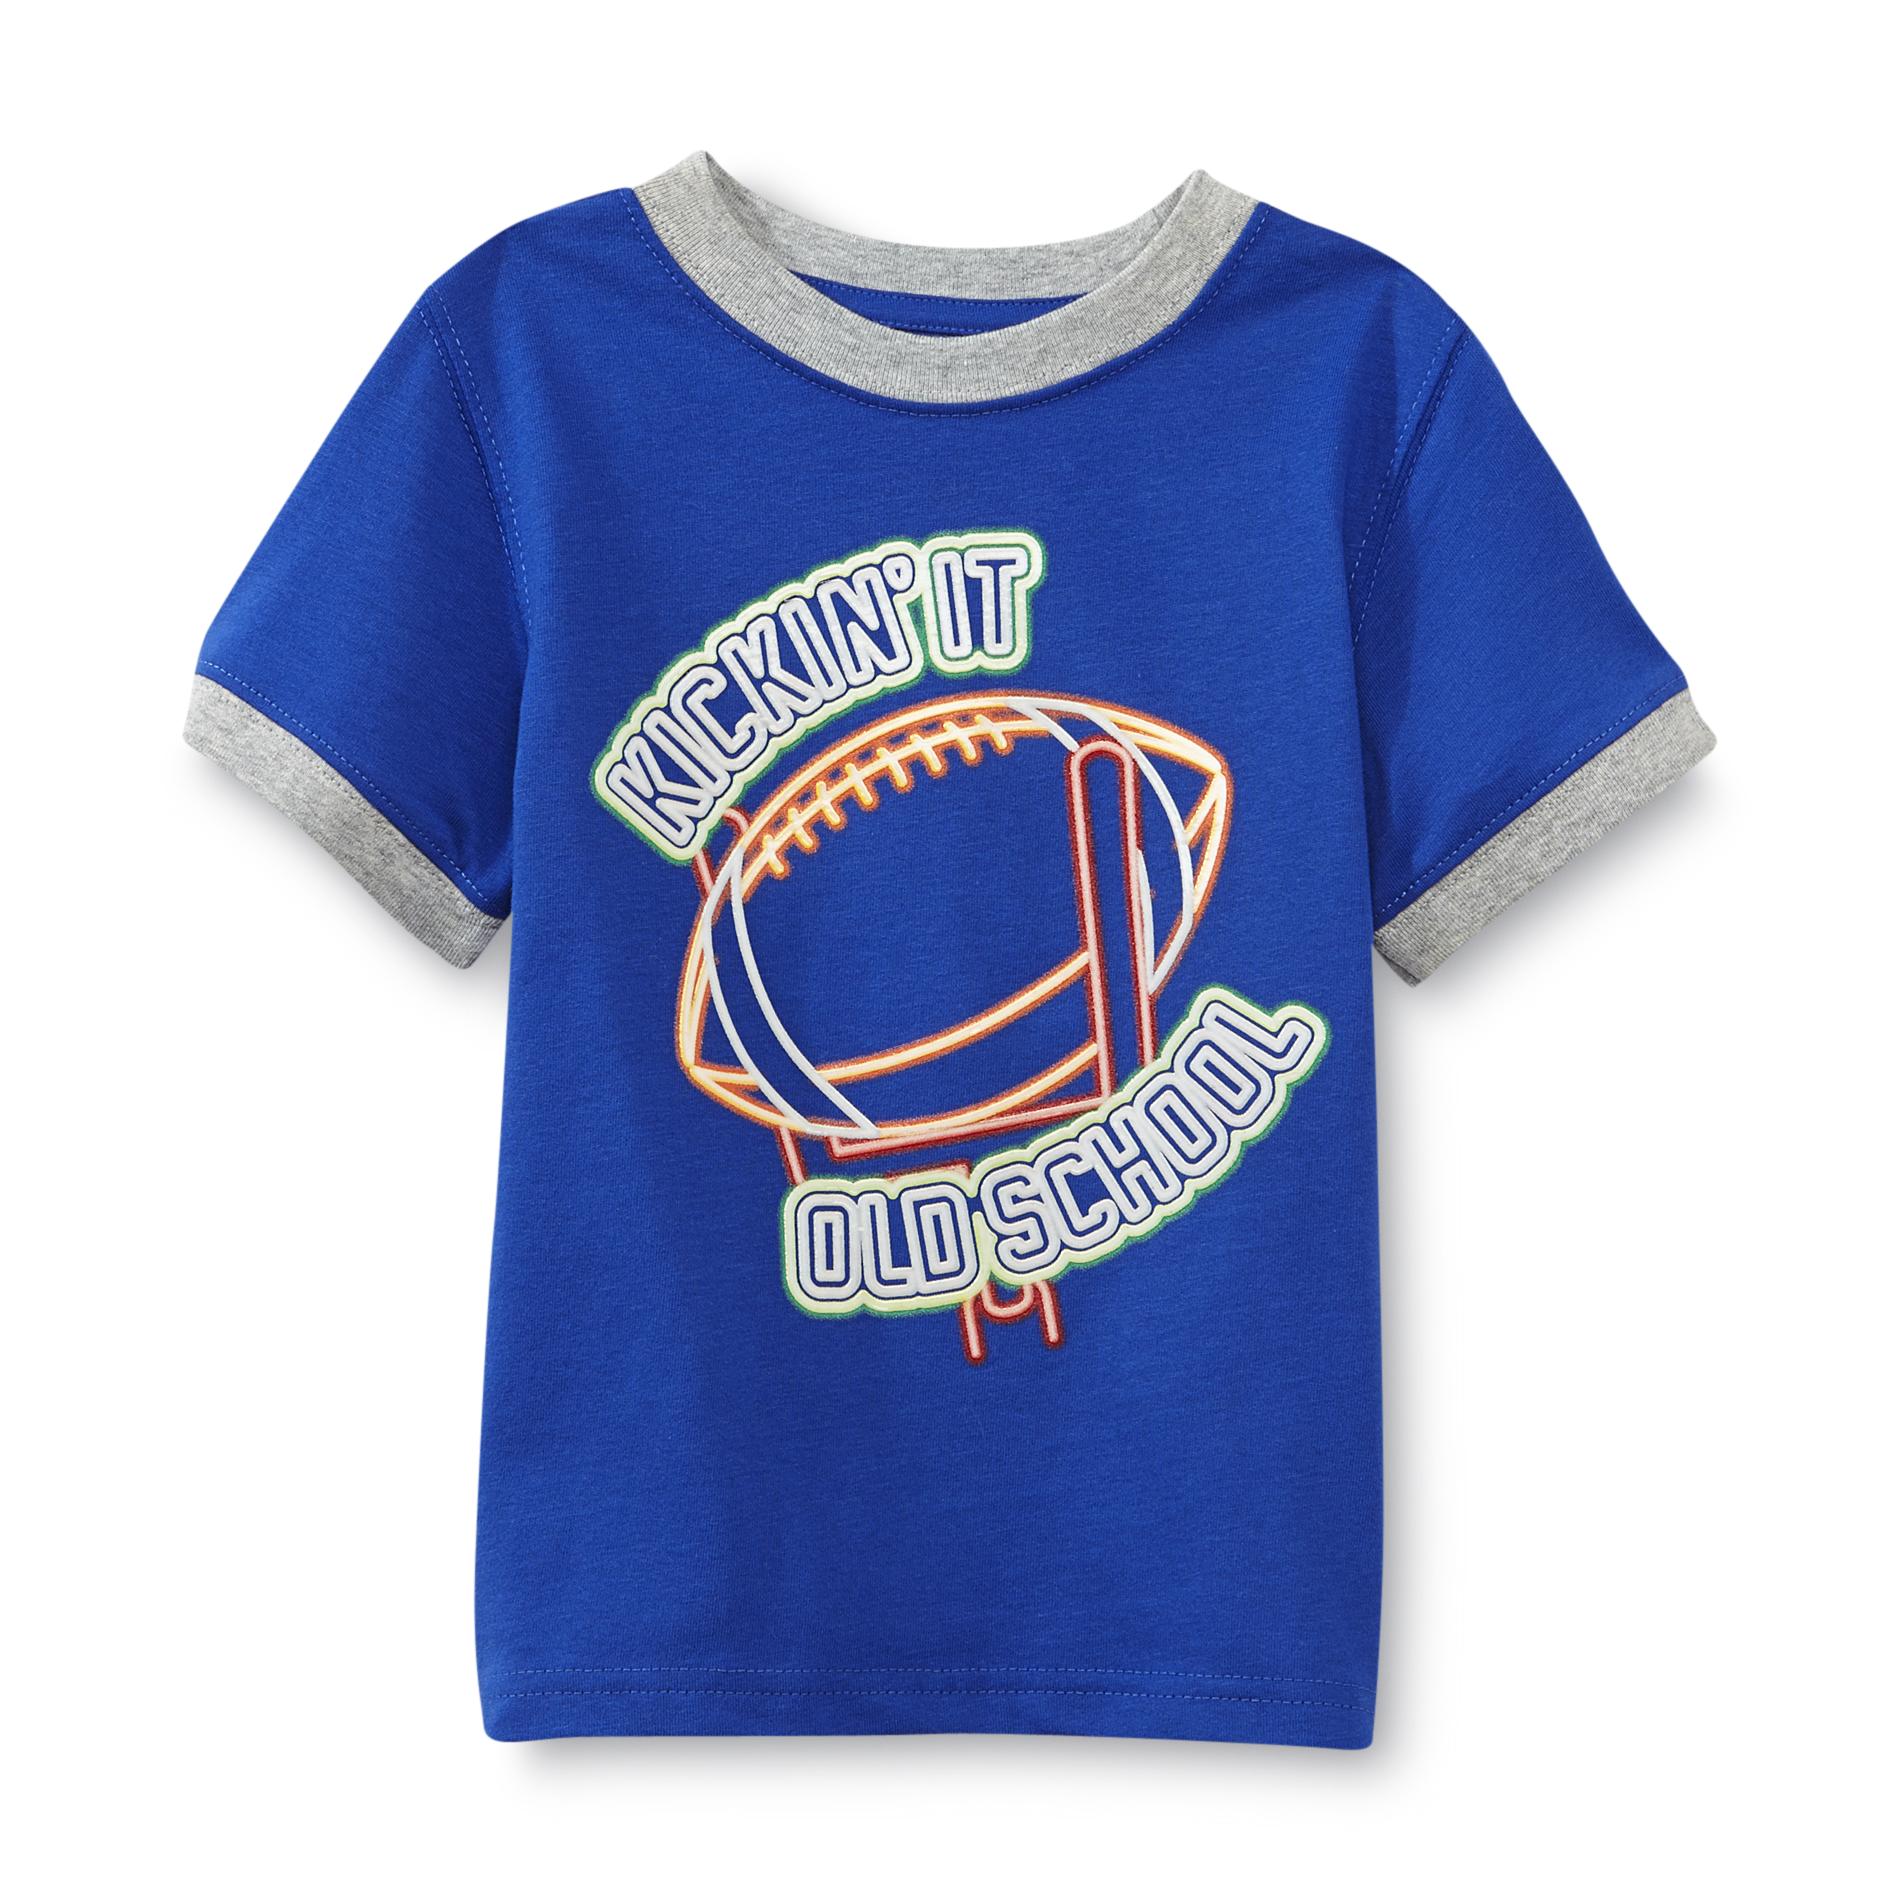 Toughskins Infant & Toddler Boy's Ringer T-Shirt - Old School Football